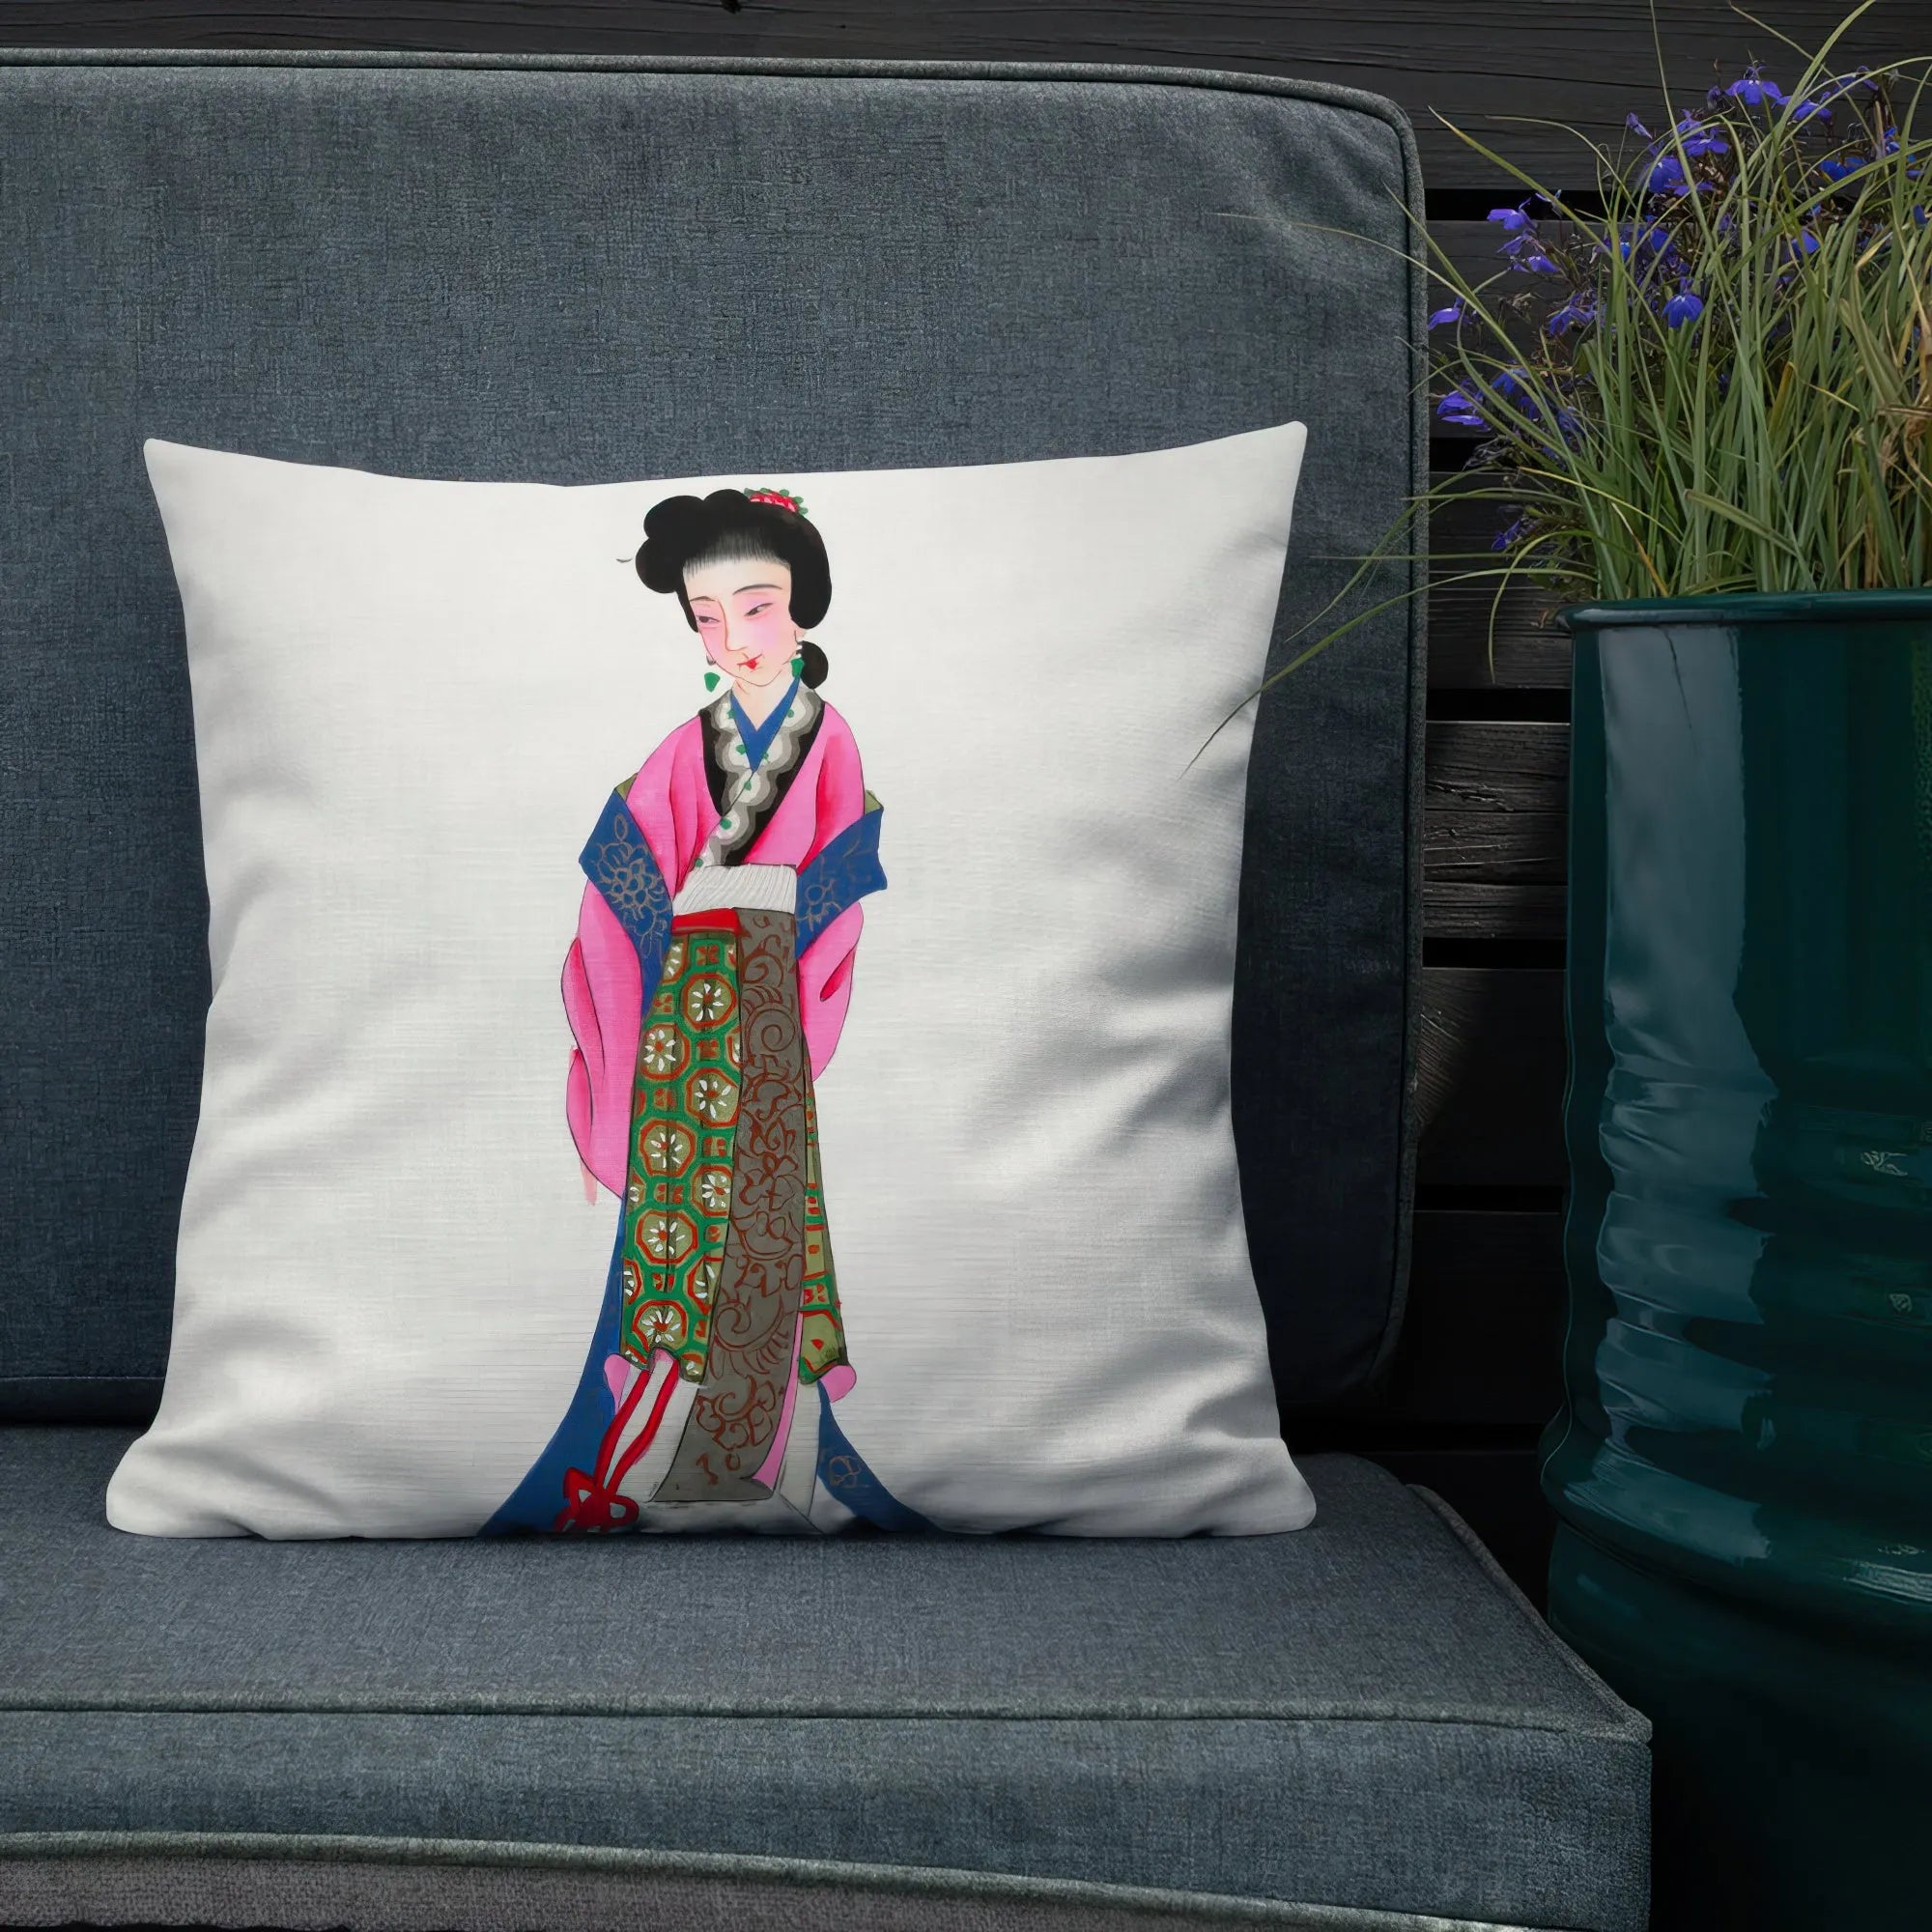 Chinese Noblewoman Cushion - Throw Pillows - Aesthetic Art